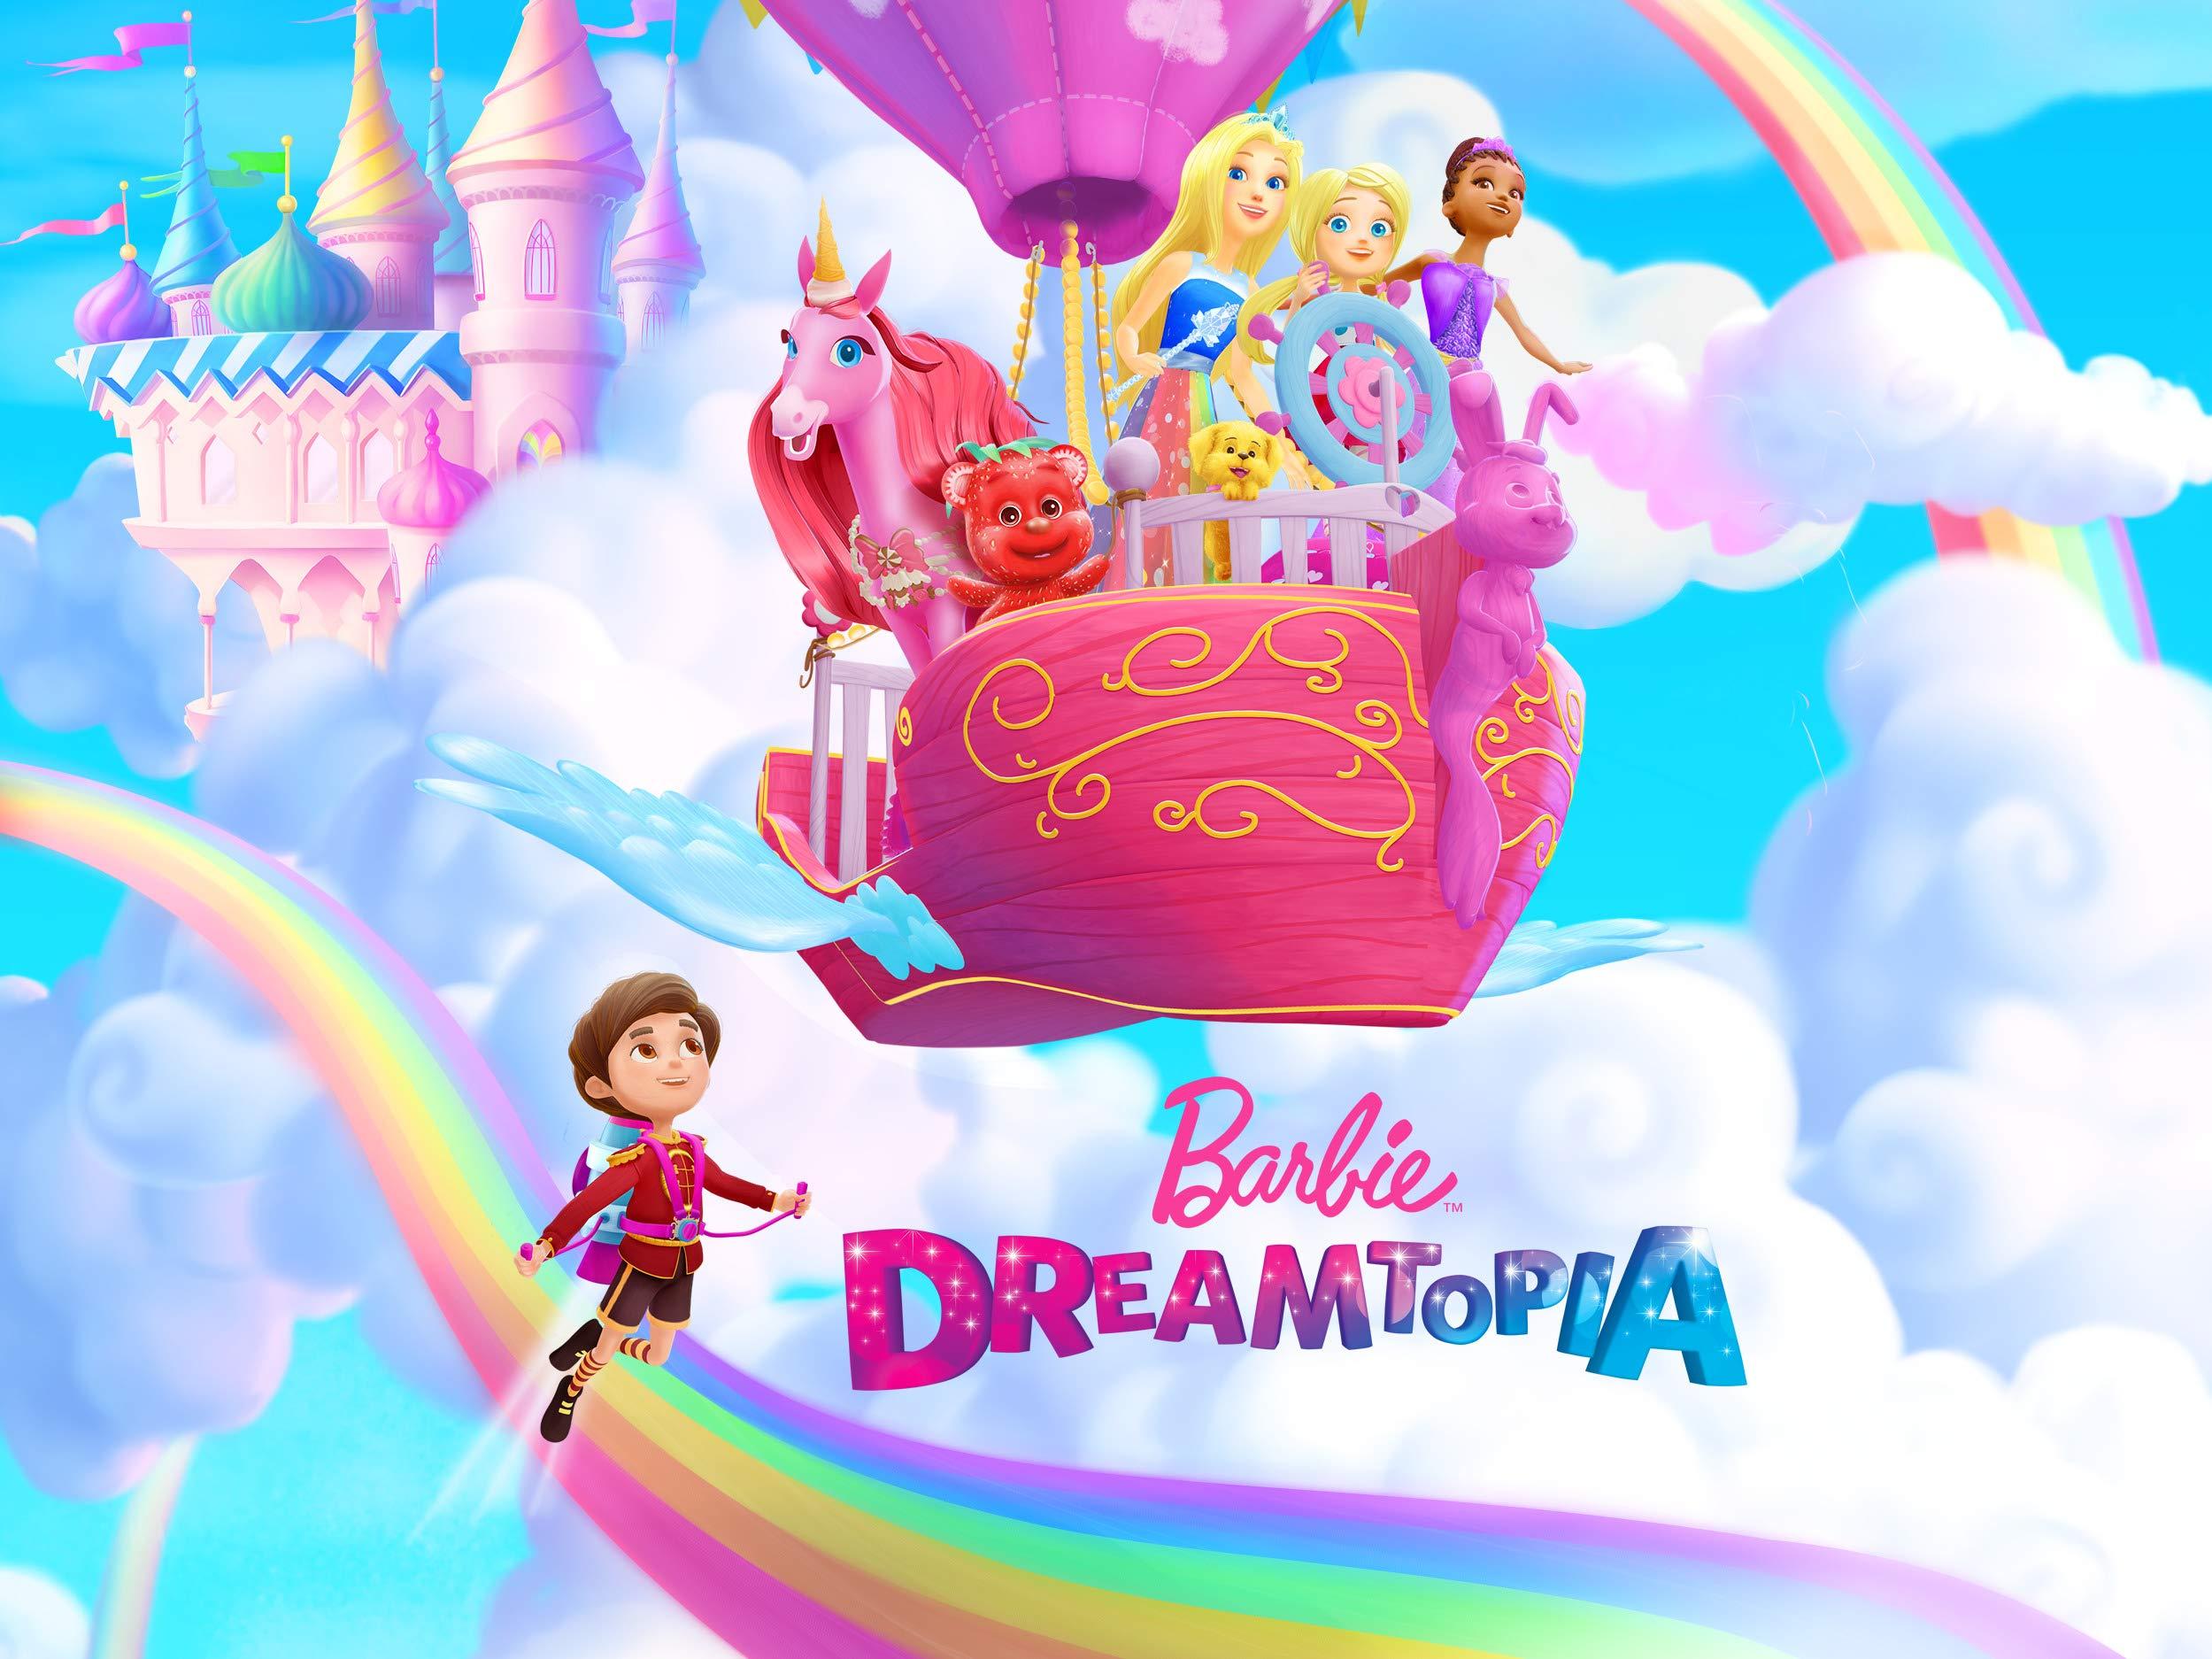 Amazon.co.uk: Watch Barbie Dreamtopia